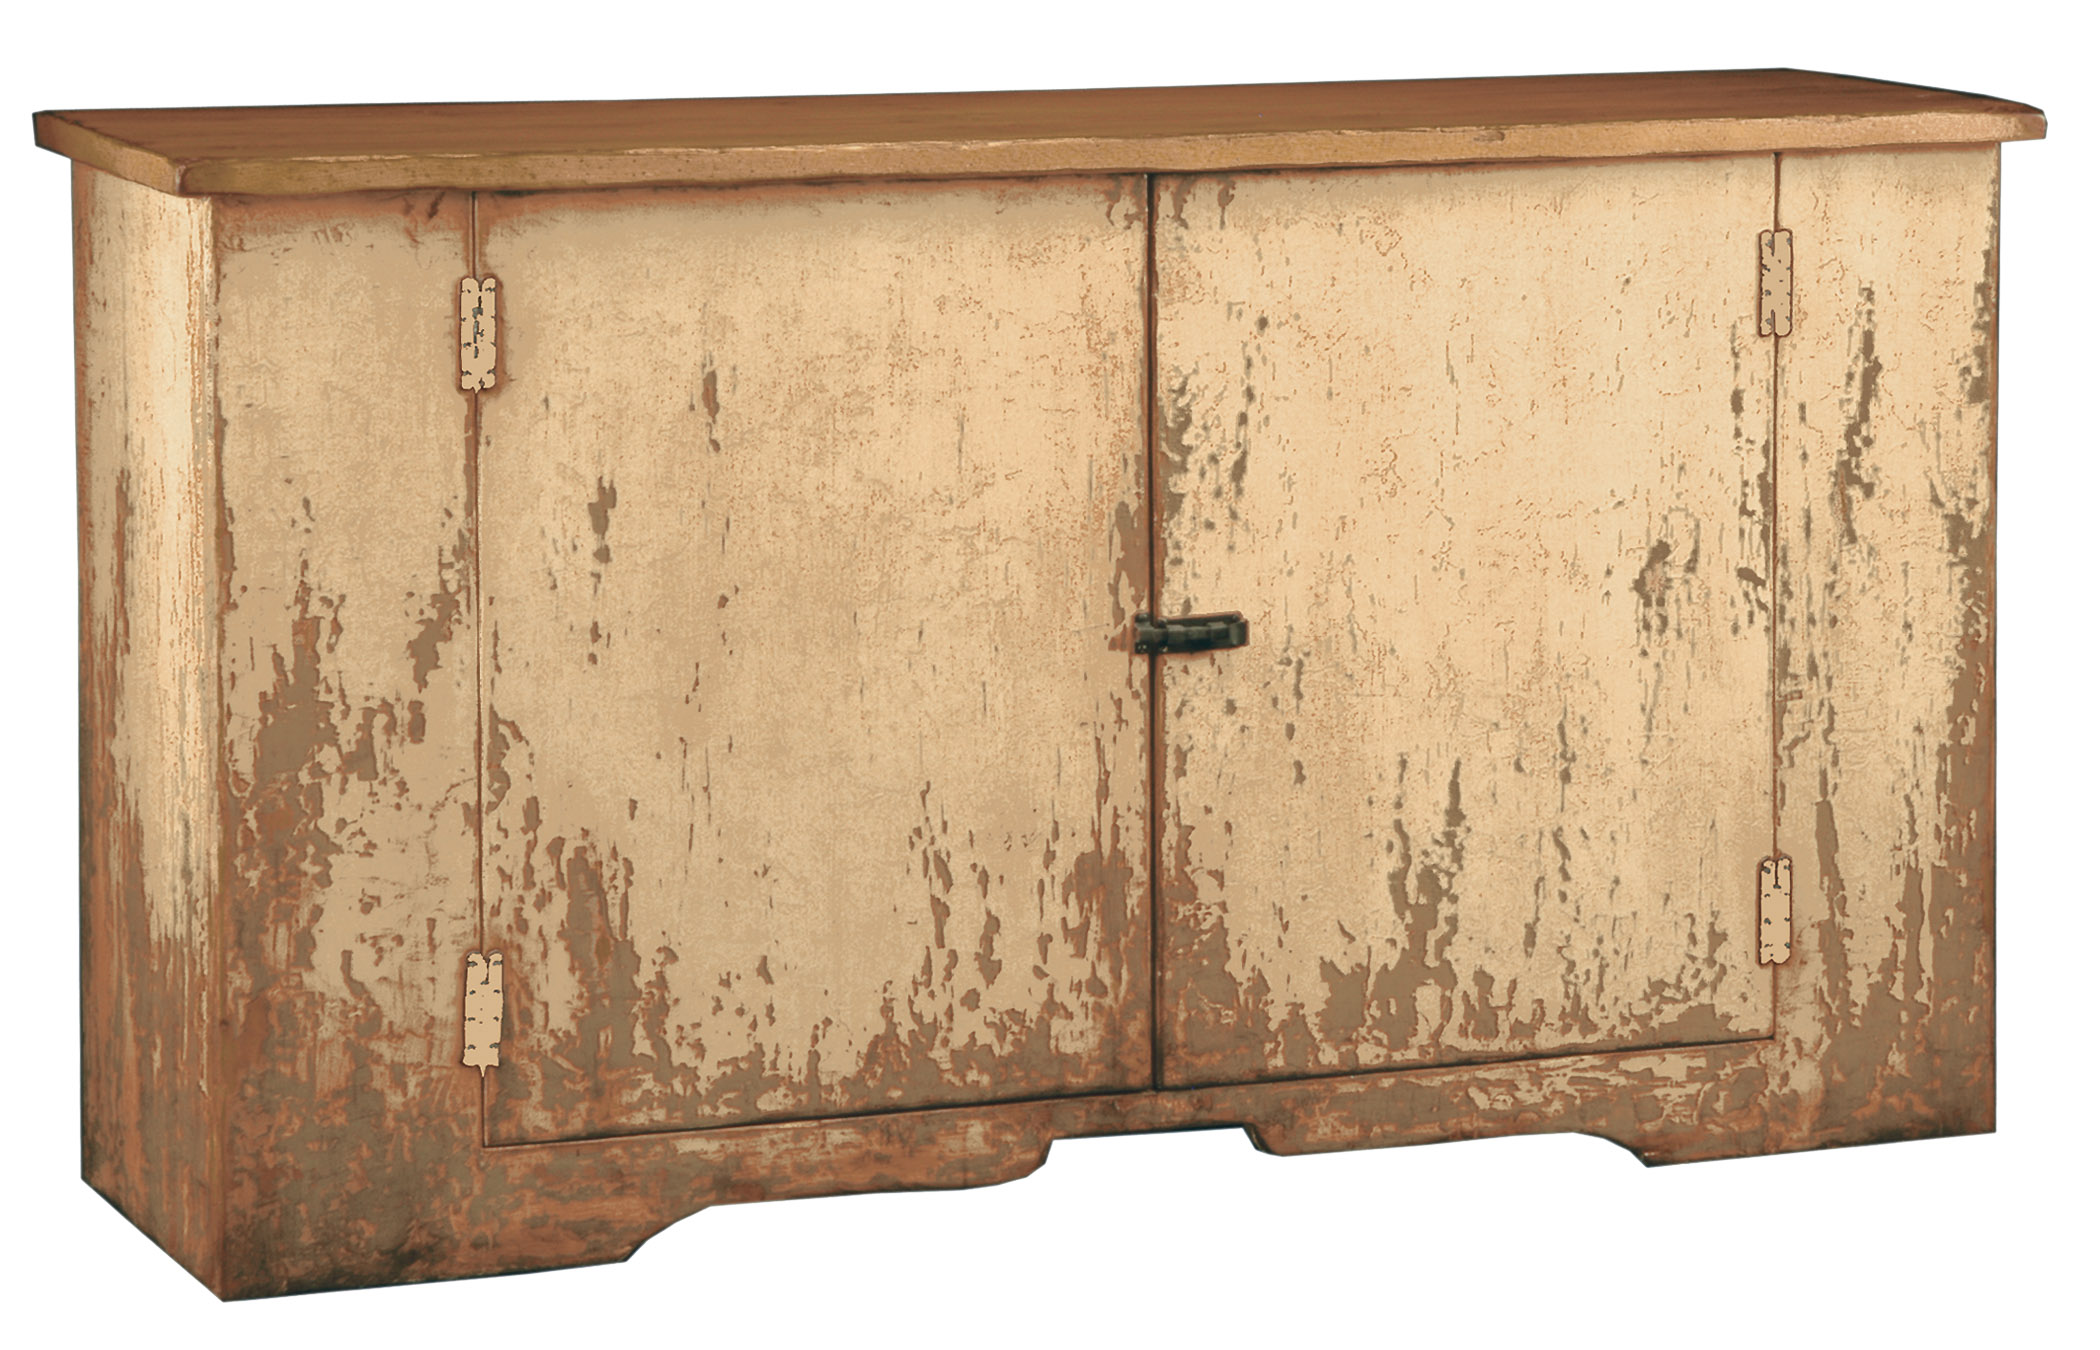 Watson distressed rustic farmhouse sideboard cabinet by Woodland furniture in Idaho Falls